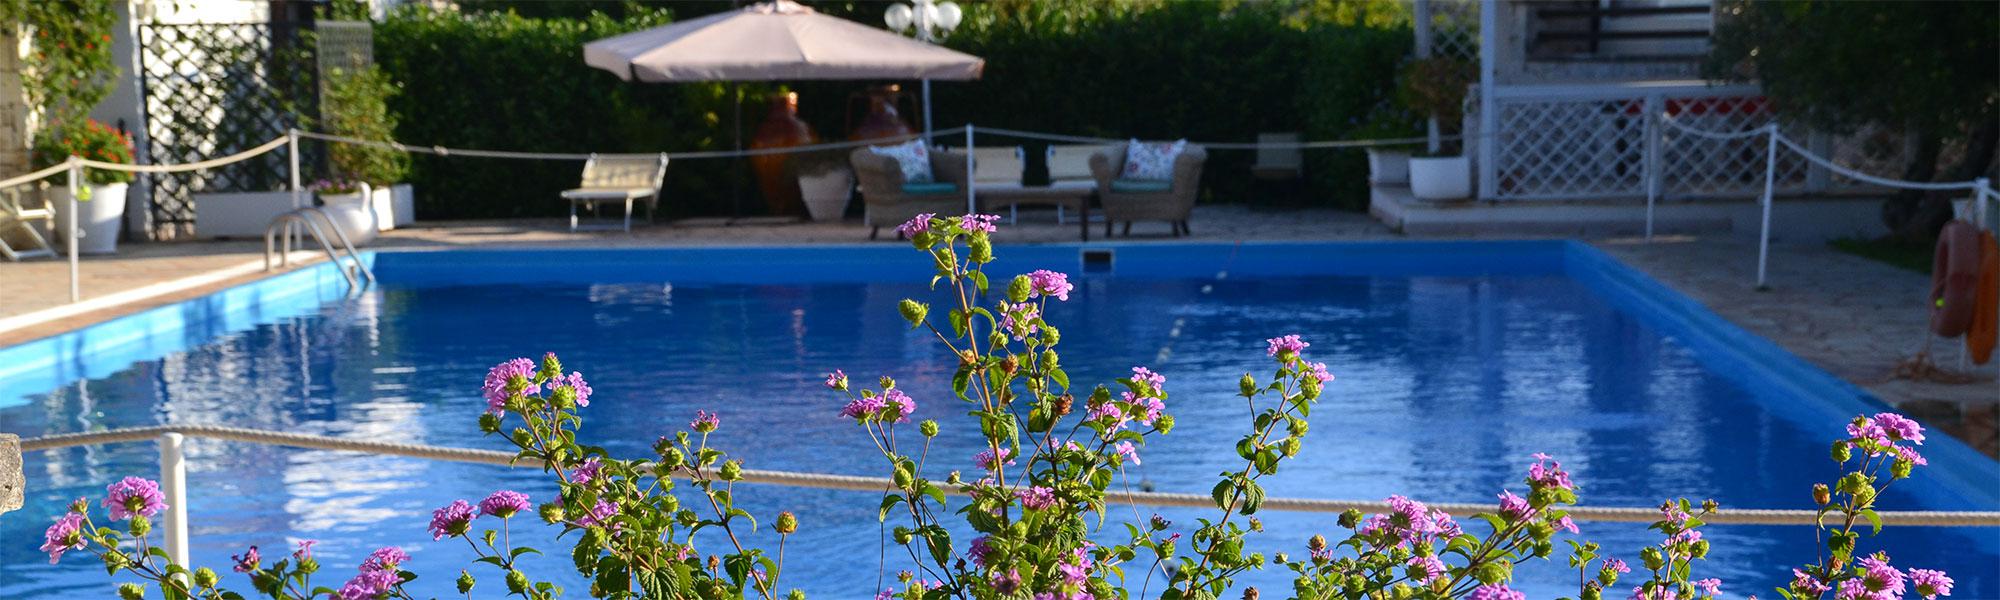 Hotel mit pool Apulien Salento - Agriturismo Salinola Ostuni 5